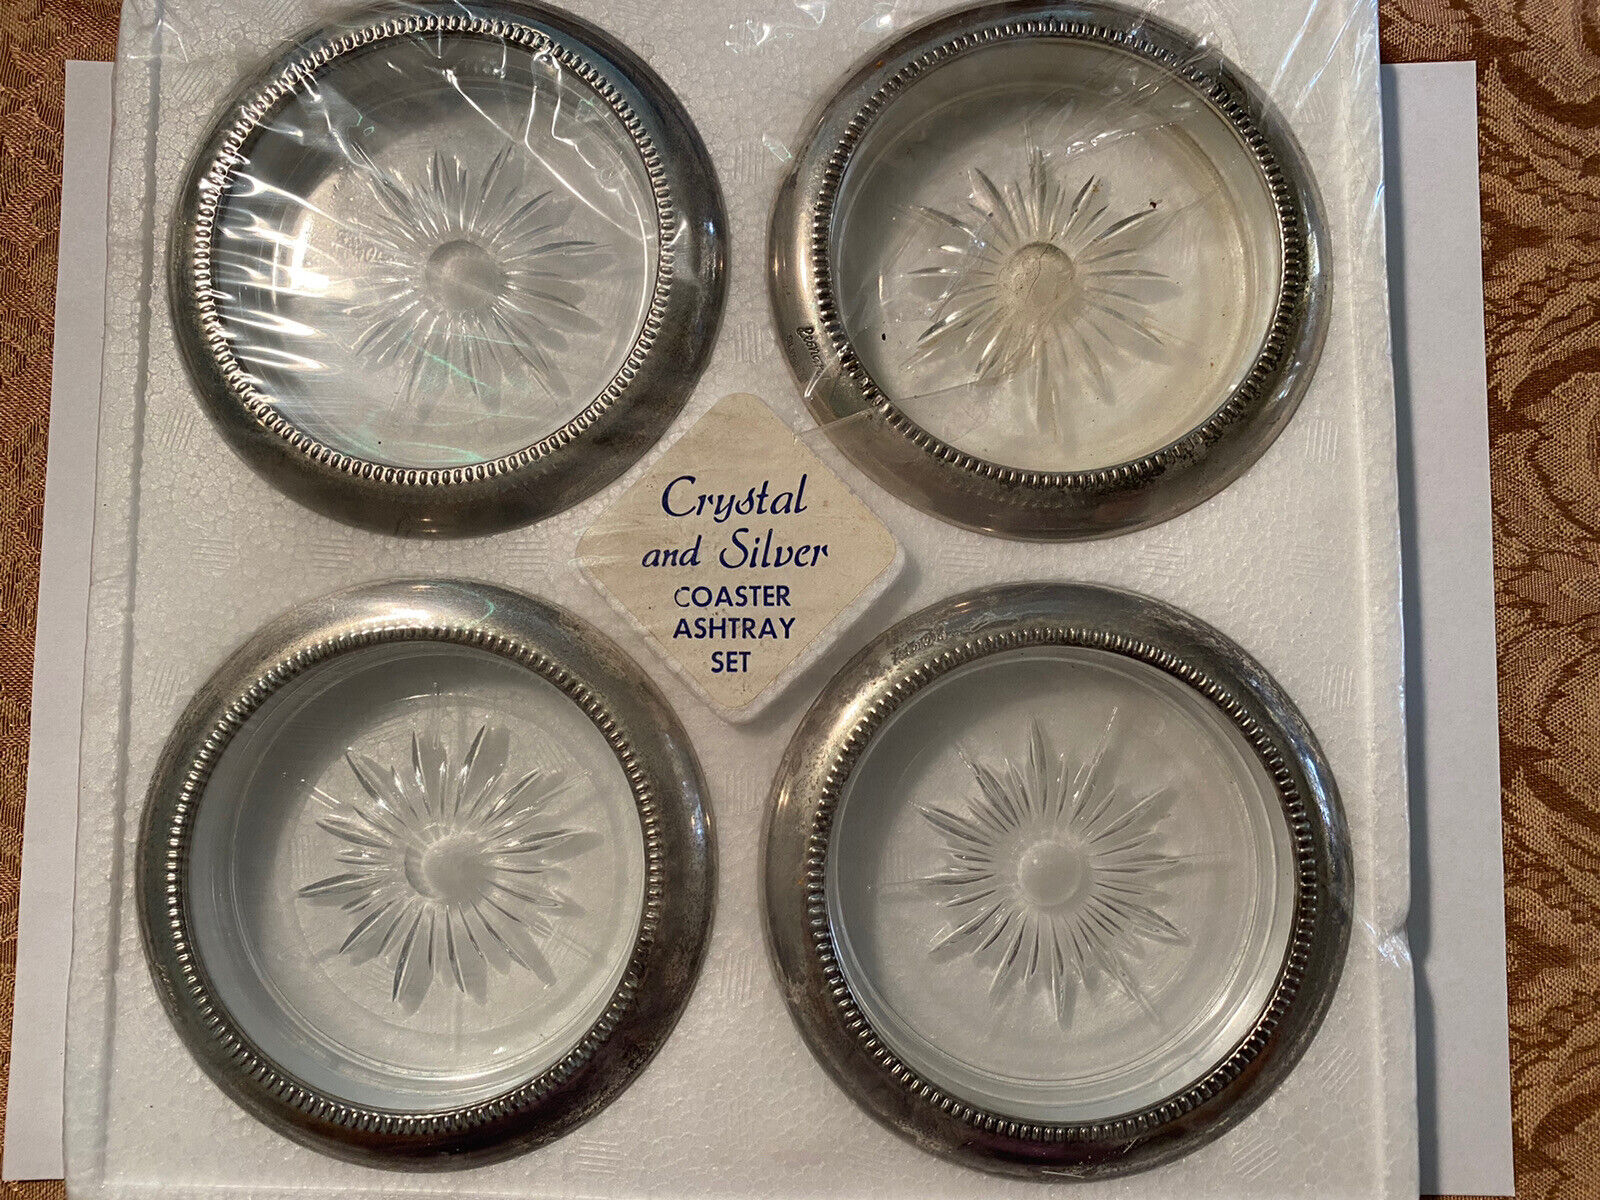 Eales 1779 Vintage Crystal And Silver Coaster Set, Original Package